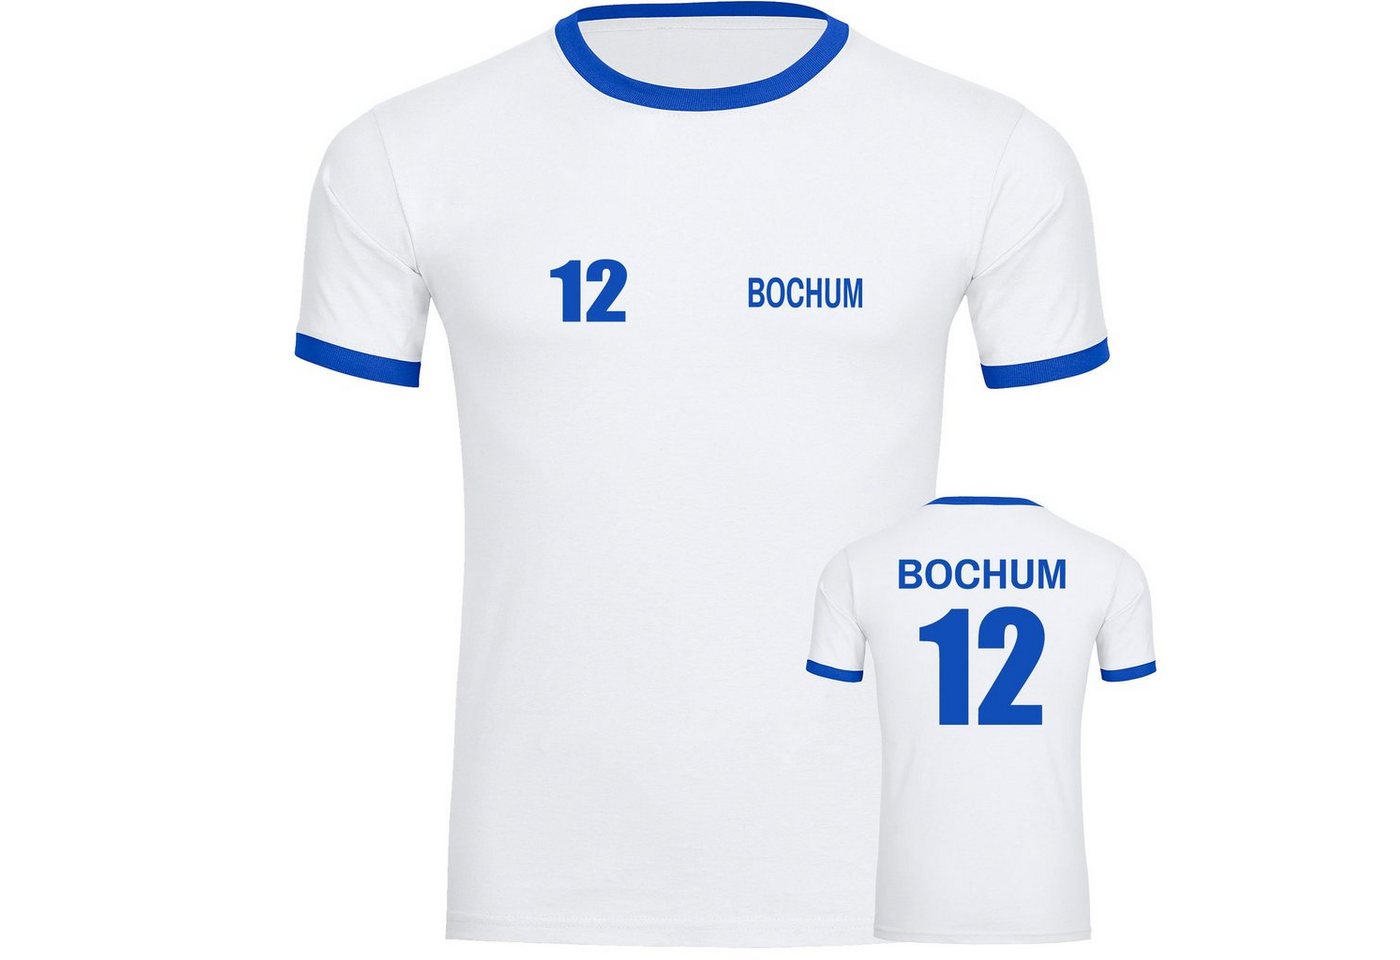 multifanshop T-Shirt Kontrast Bochum - Trikot 12 - Männer von multifanshop